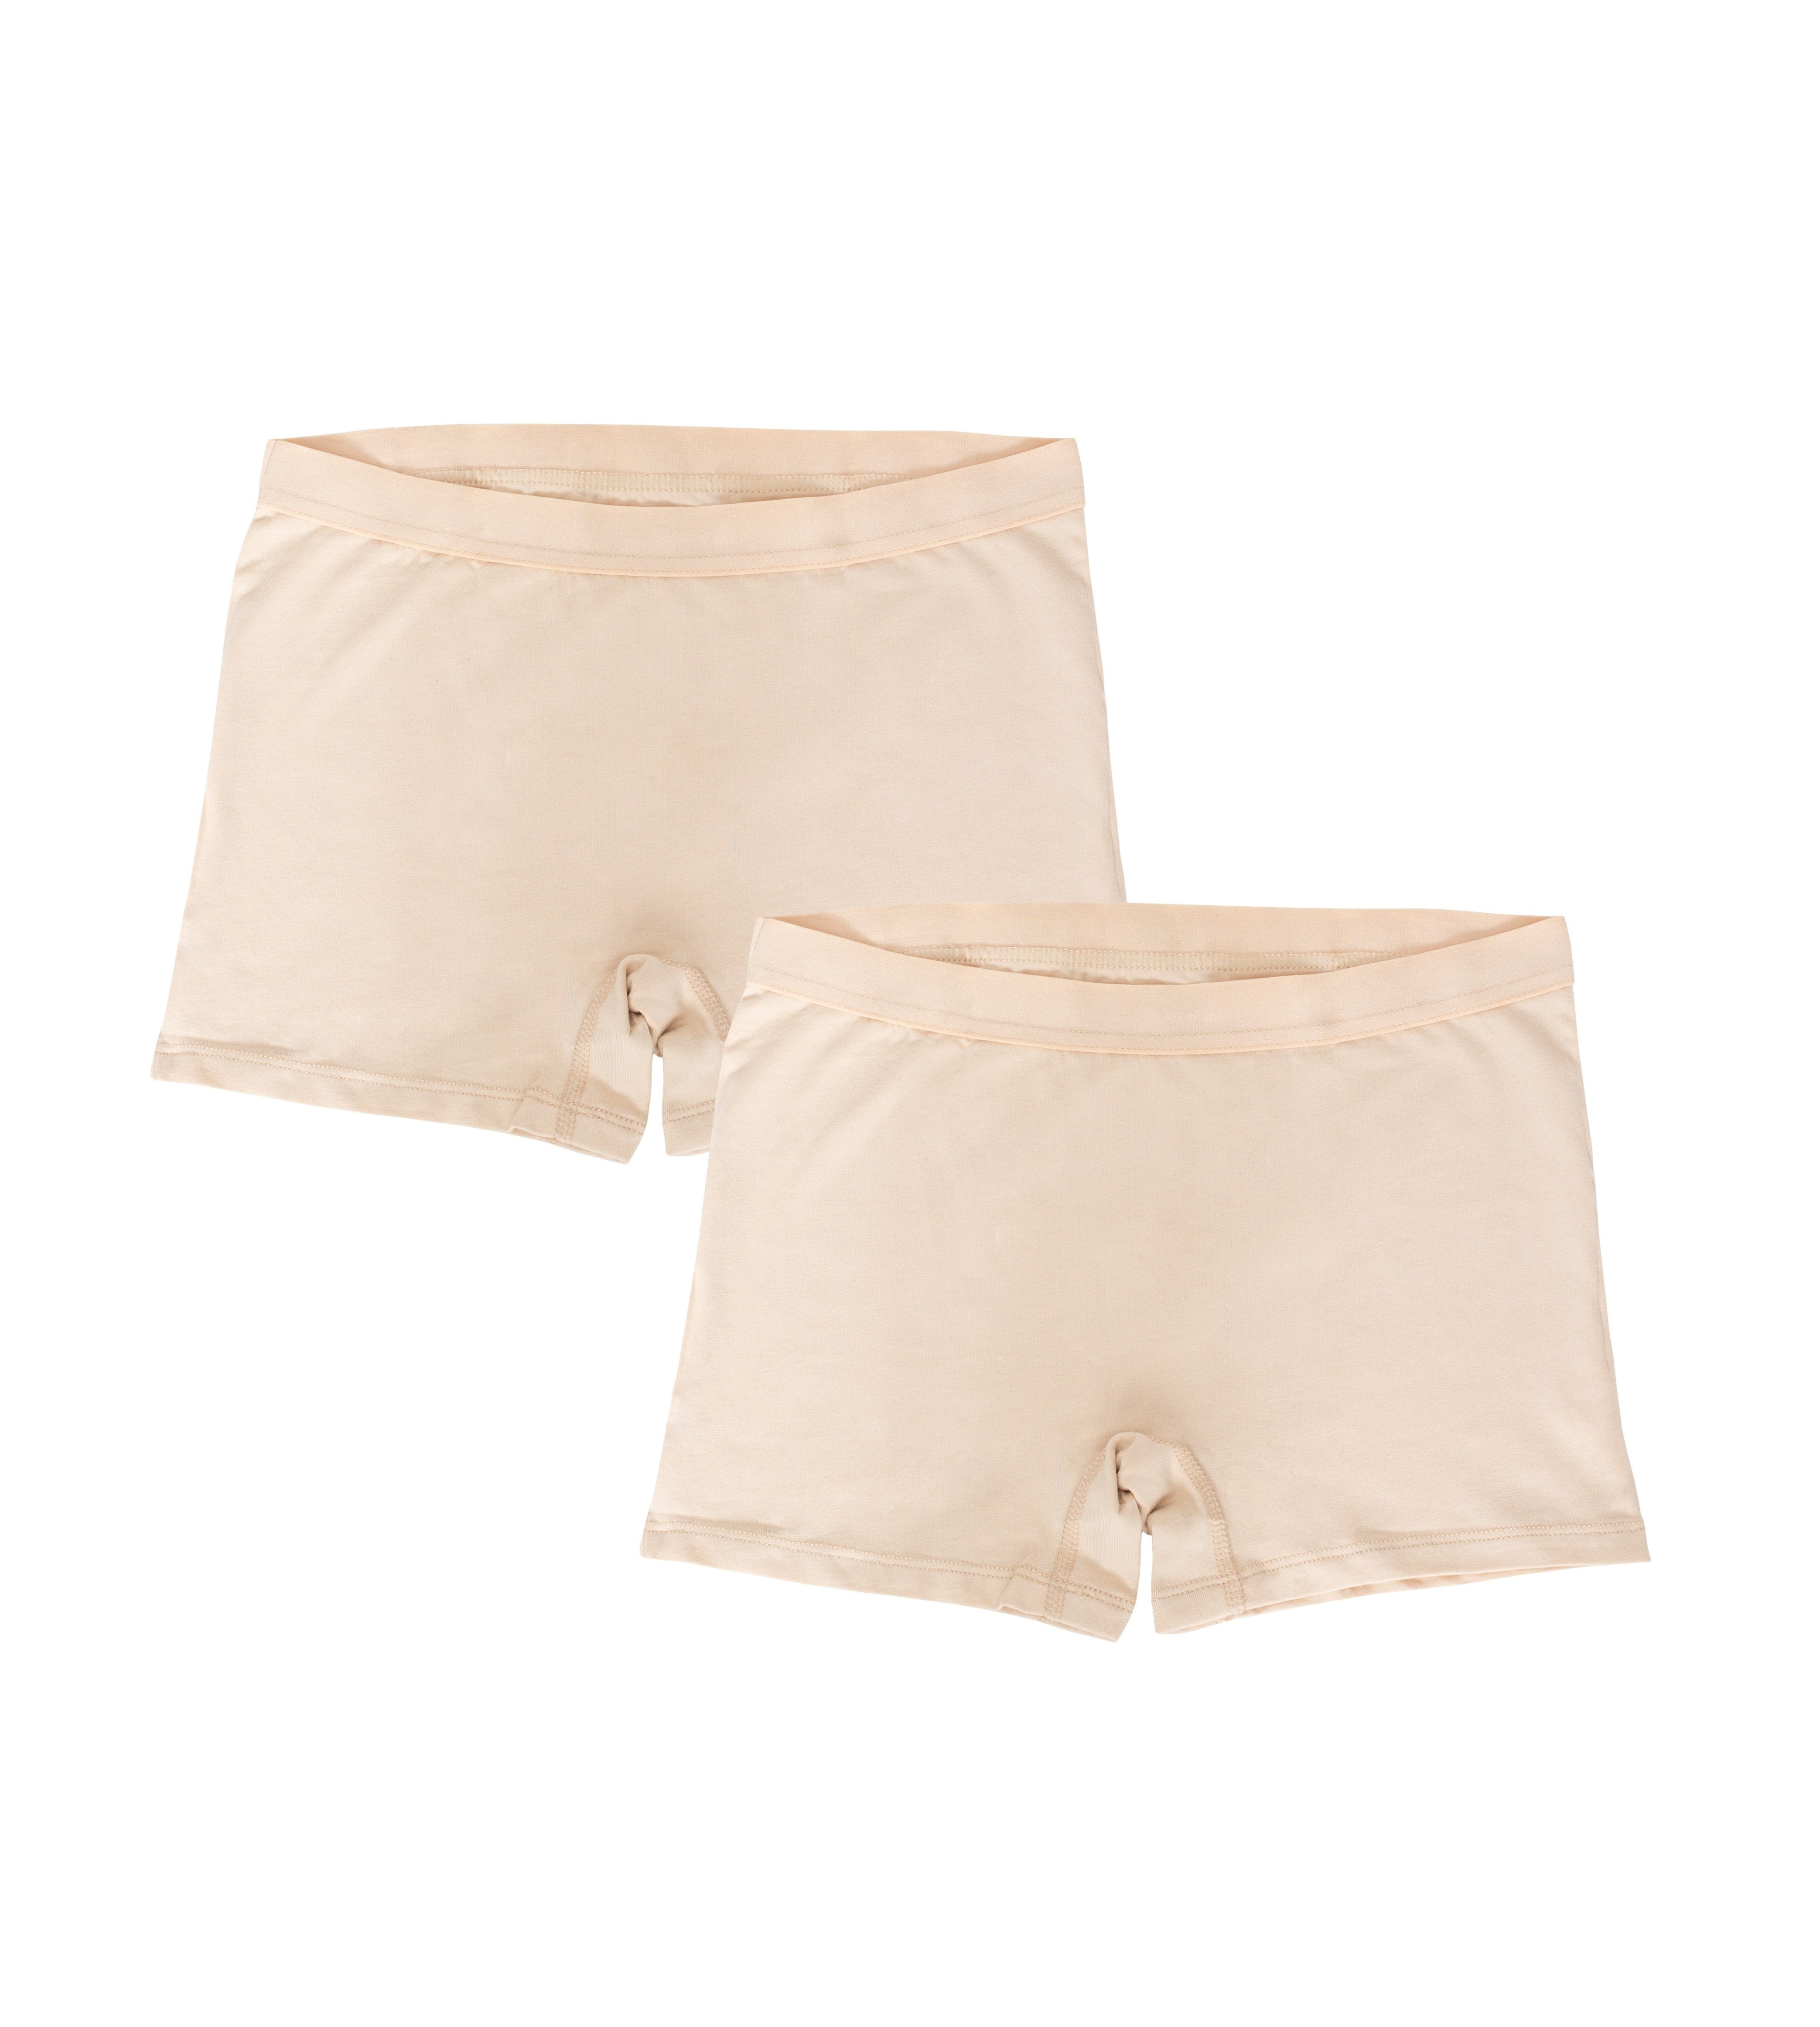 EVARI Women's Boyshort Panties Comfortable Cotton Underwear Package of 5 in  an assortment of colors, EVARI underwear